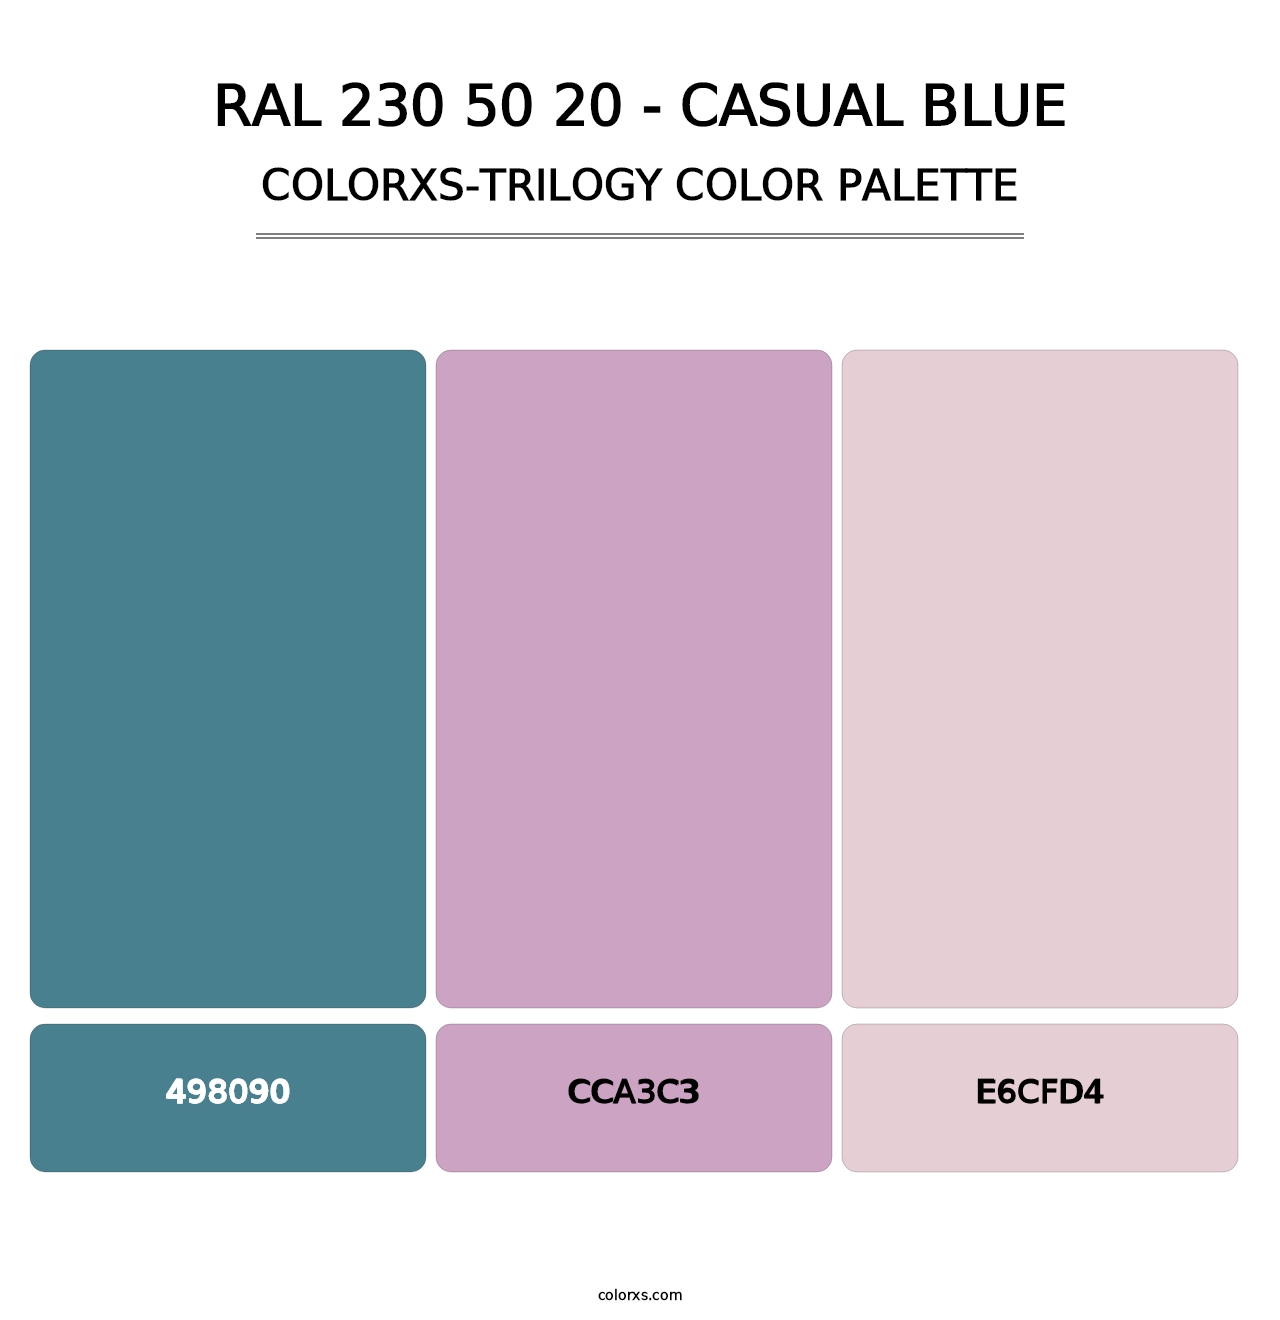 RAL 230 50 20 - Casual Blue - Colorxs Trilogy Palette